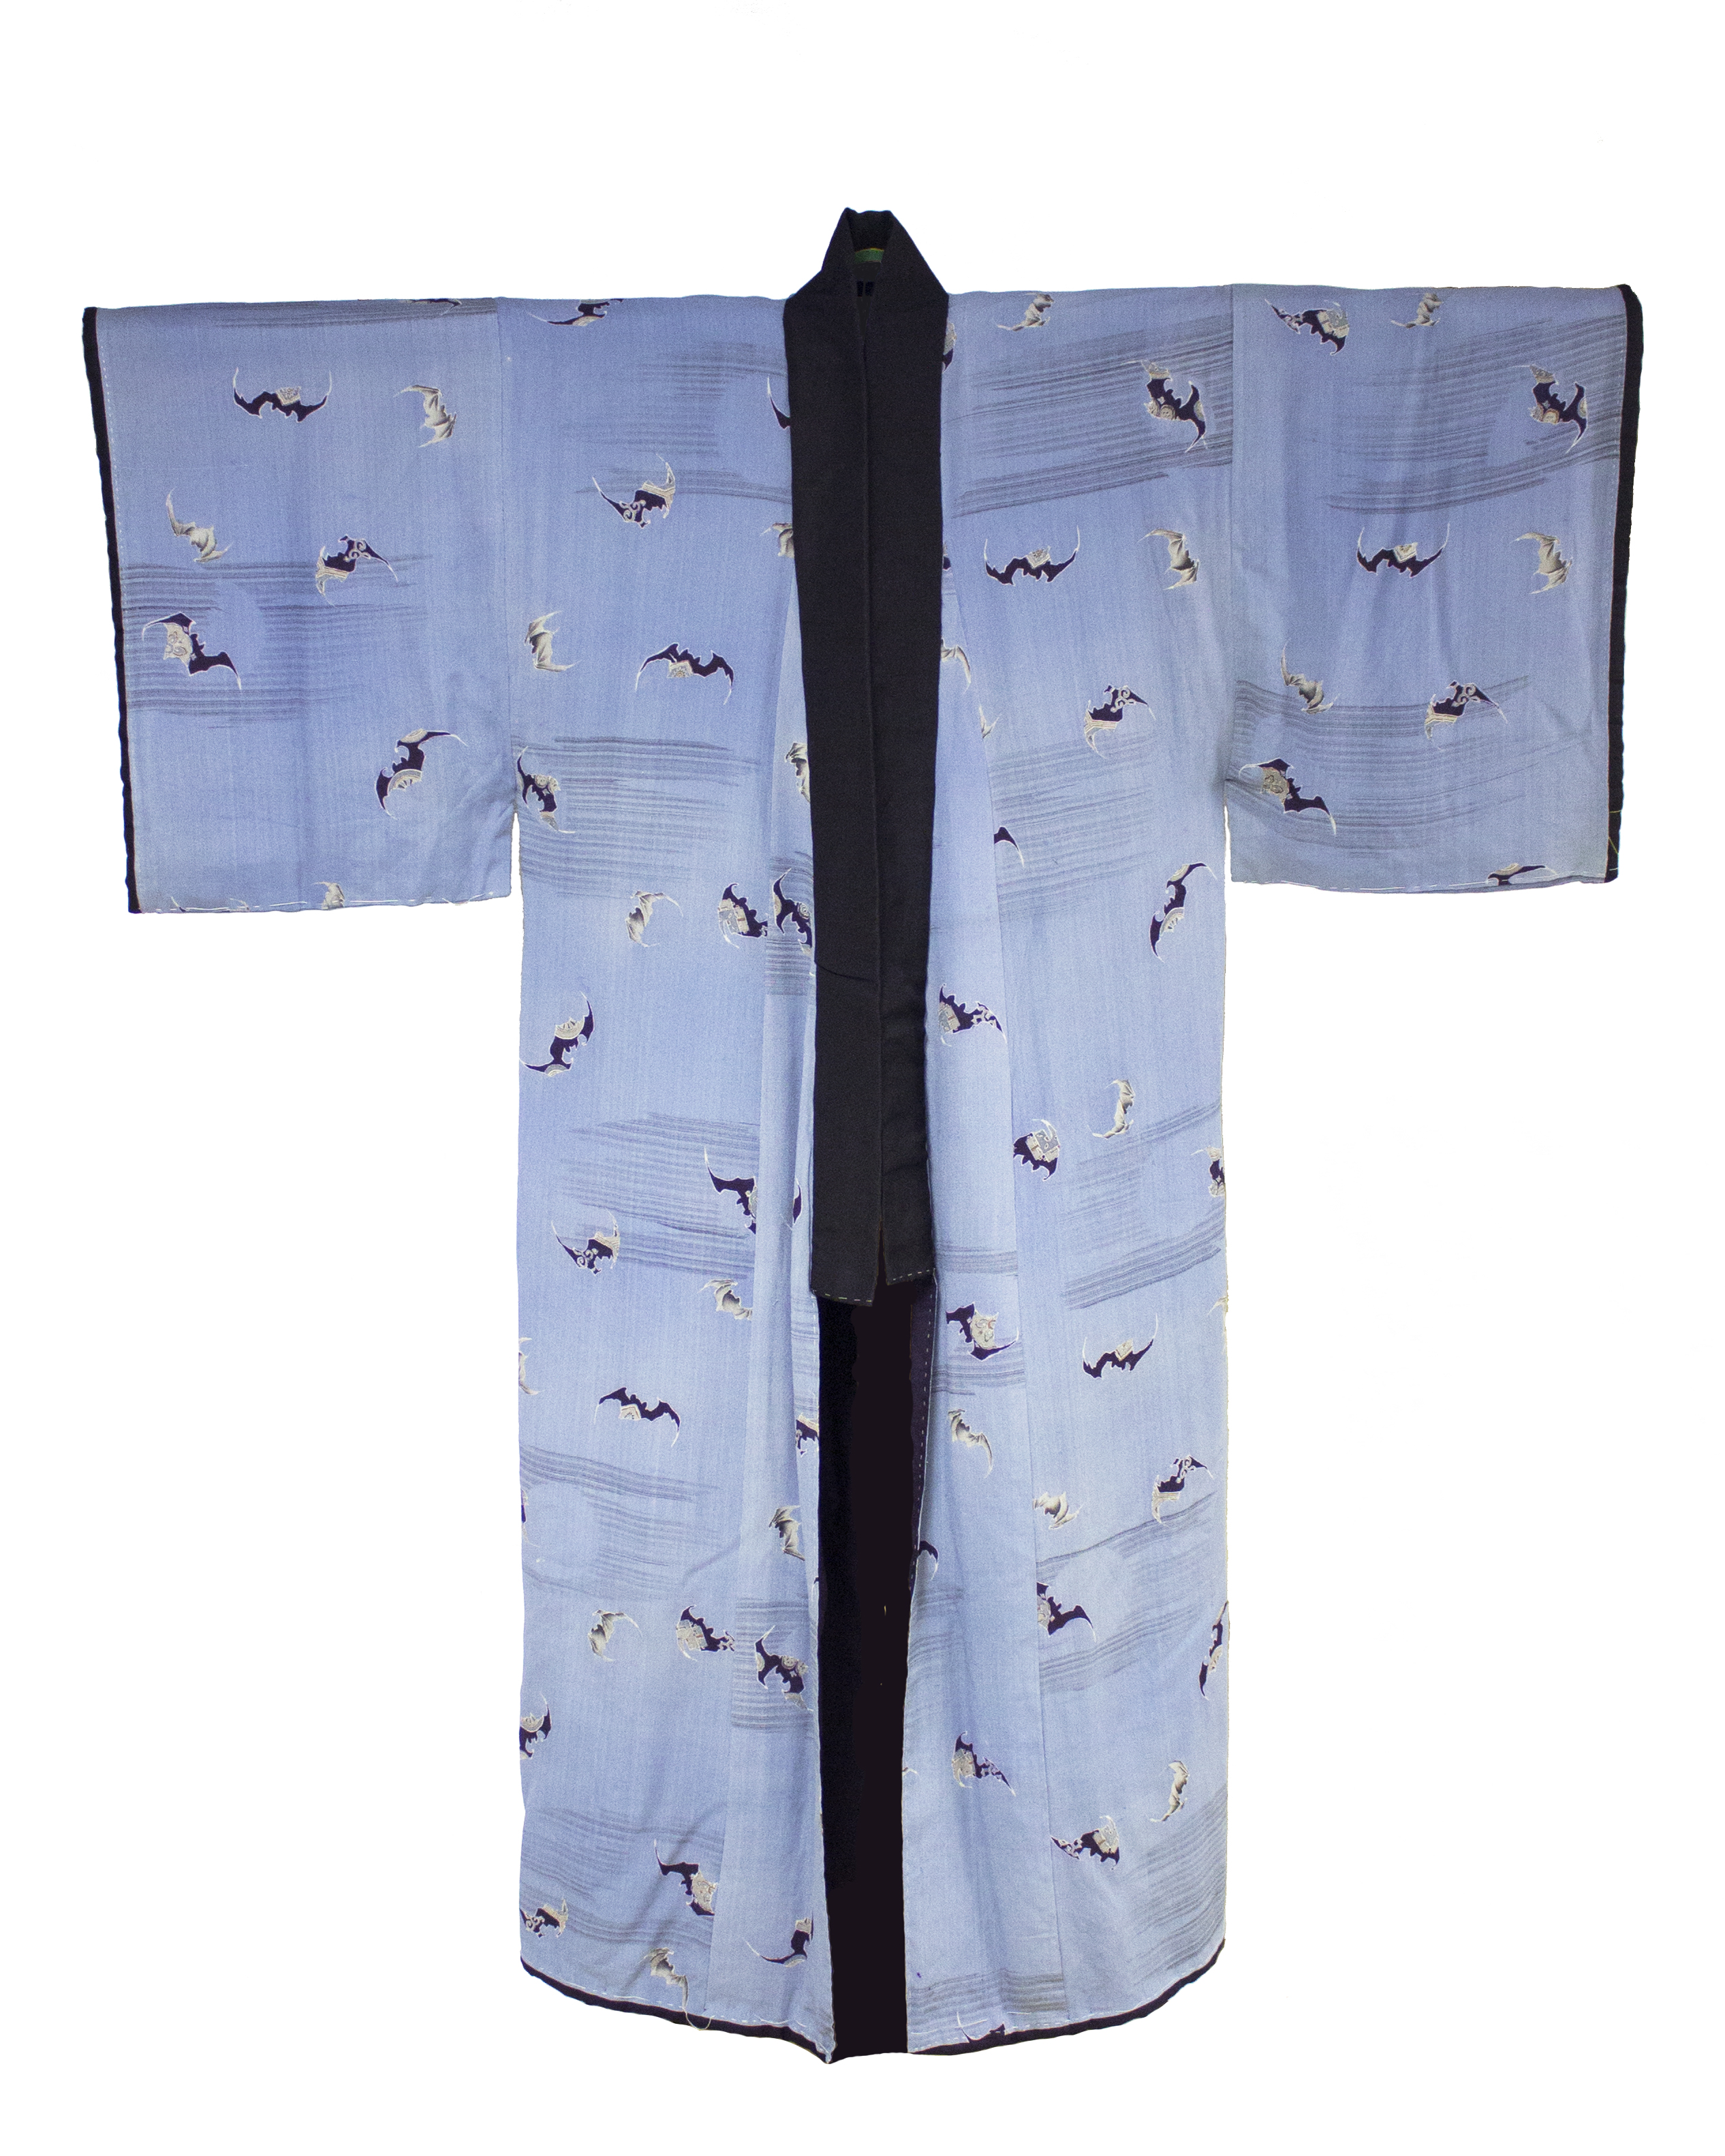 A Meiji-era kimono, decorated with bats, that belonged to Charles Longfellow.